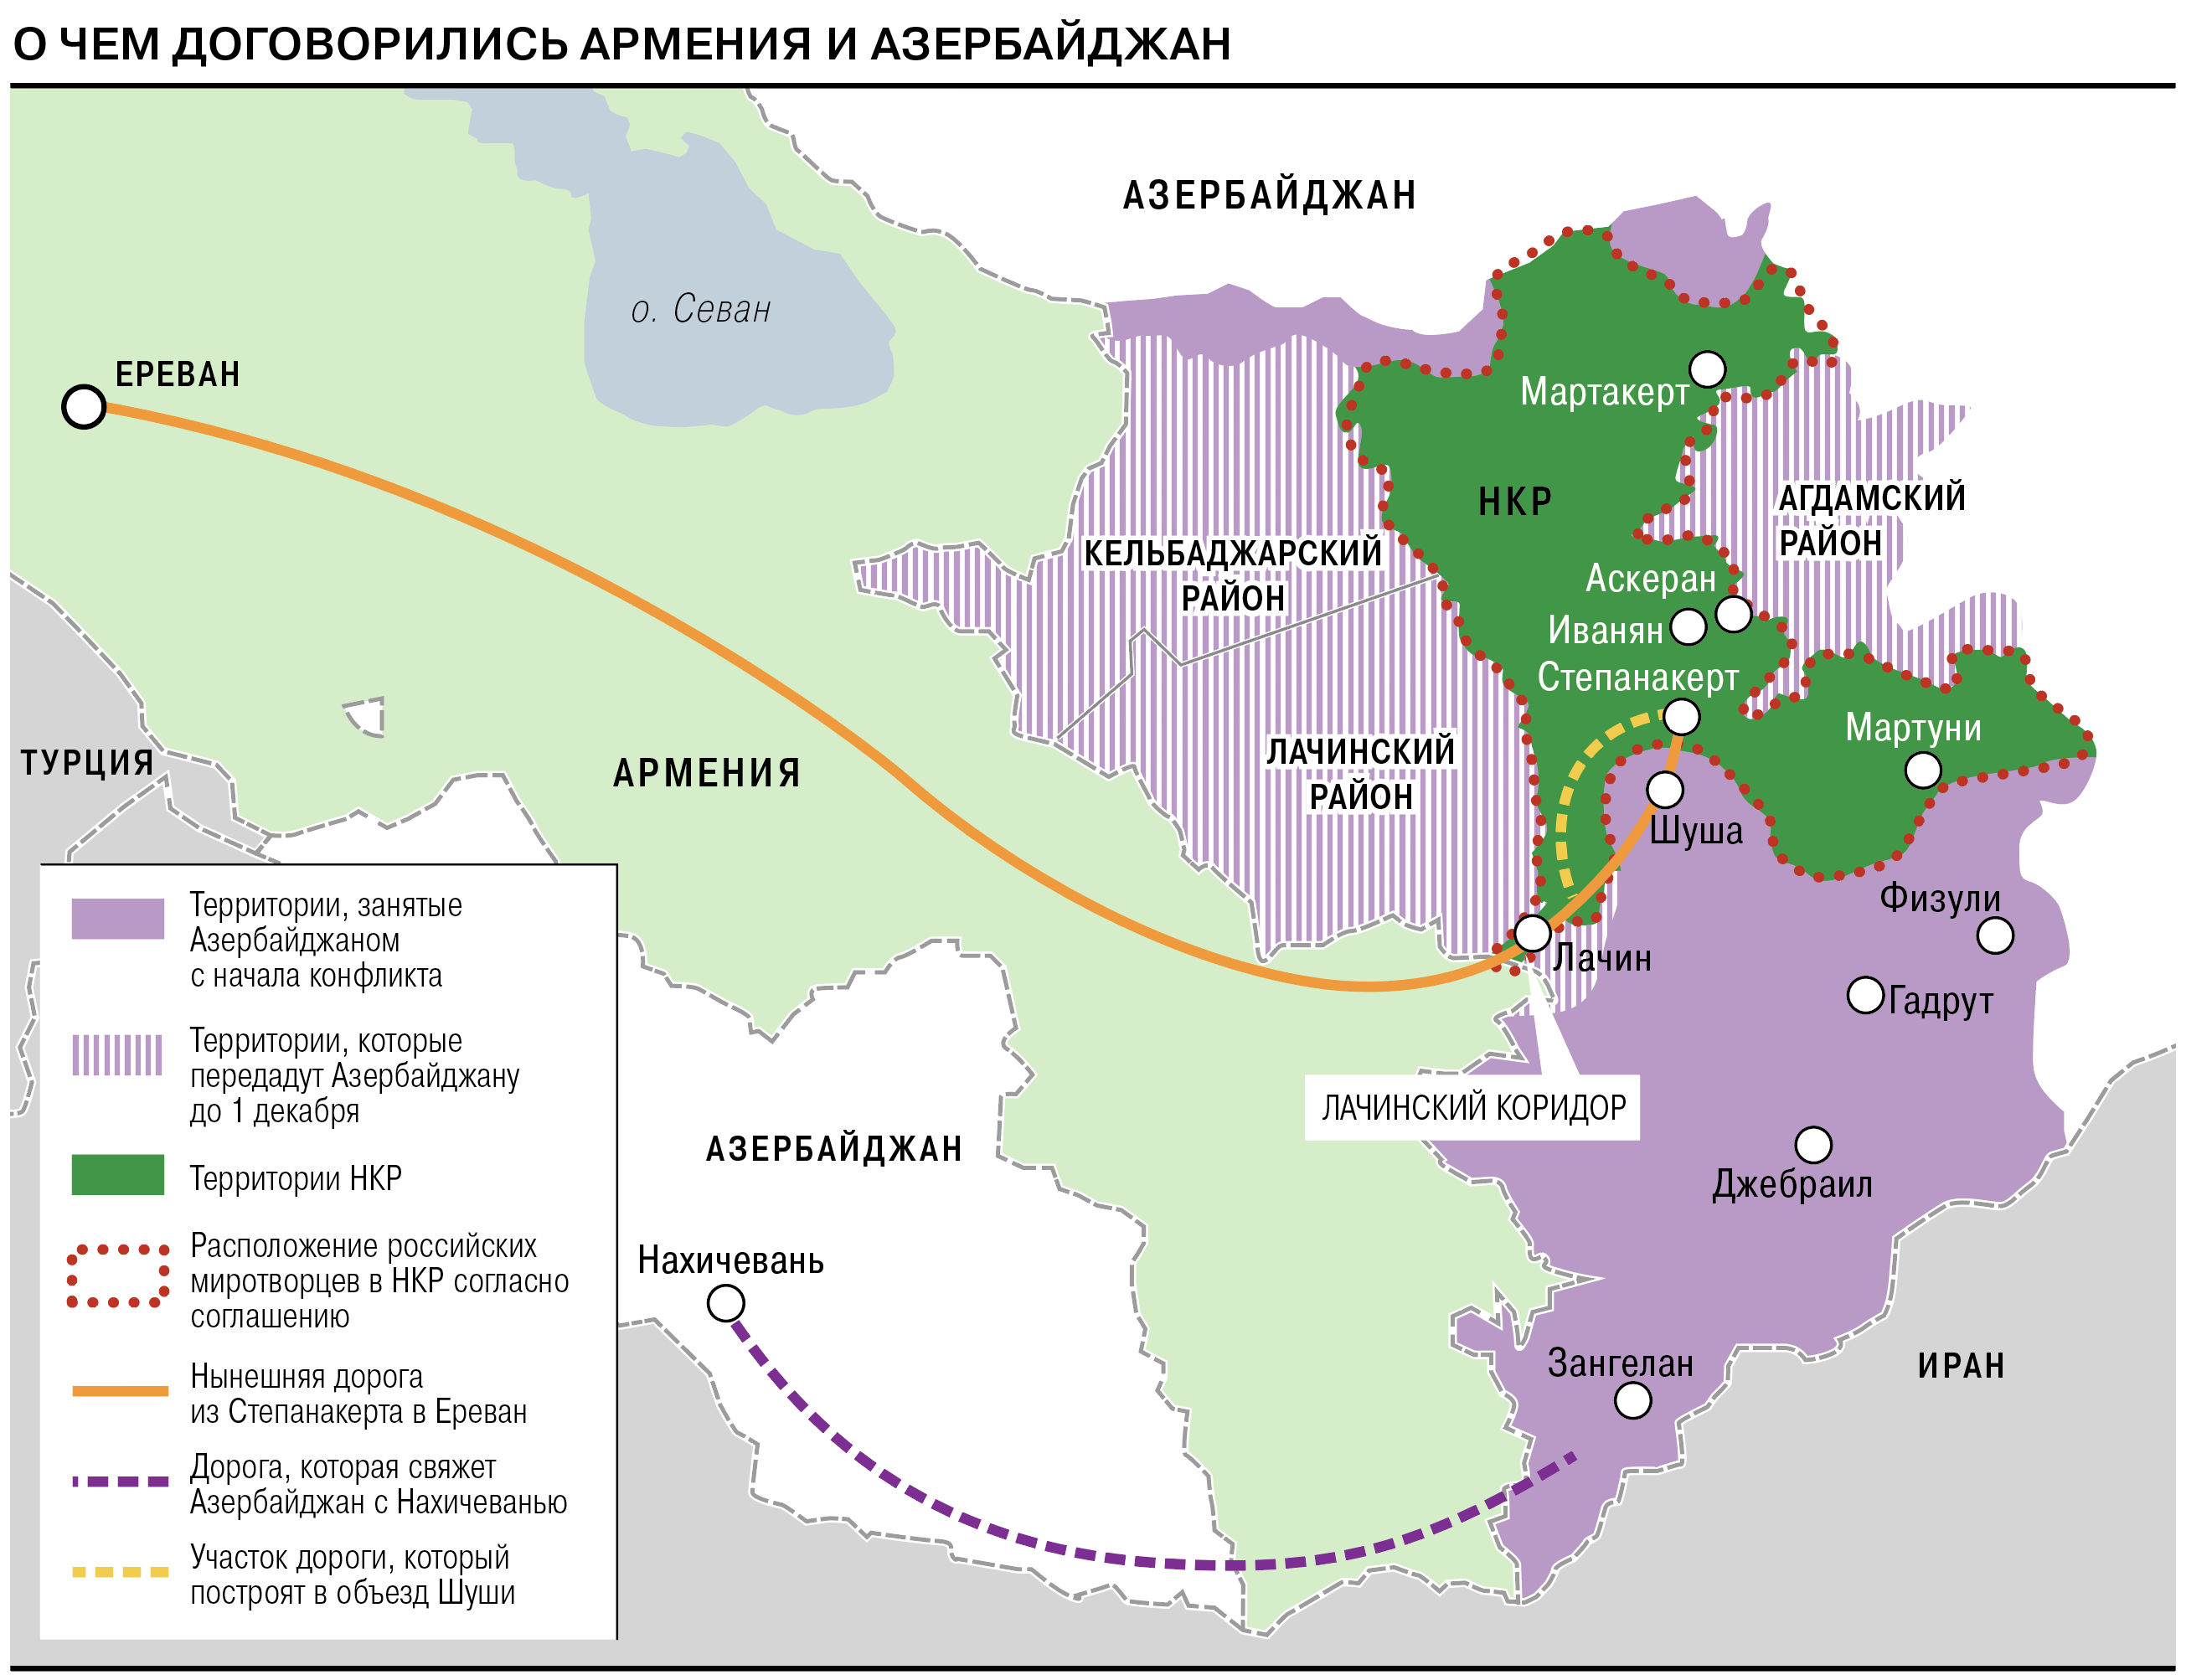 Территория азербайджана на карте. Карта Карабаха после войны 2020. Конфликт в Нагорном Карабахе 2020 карта.